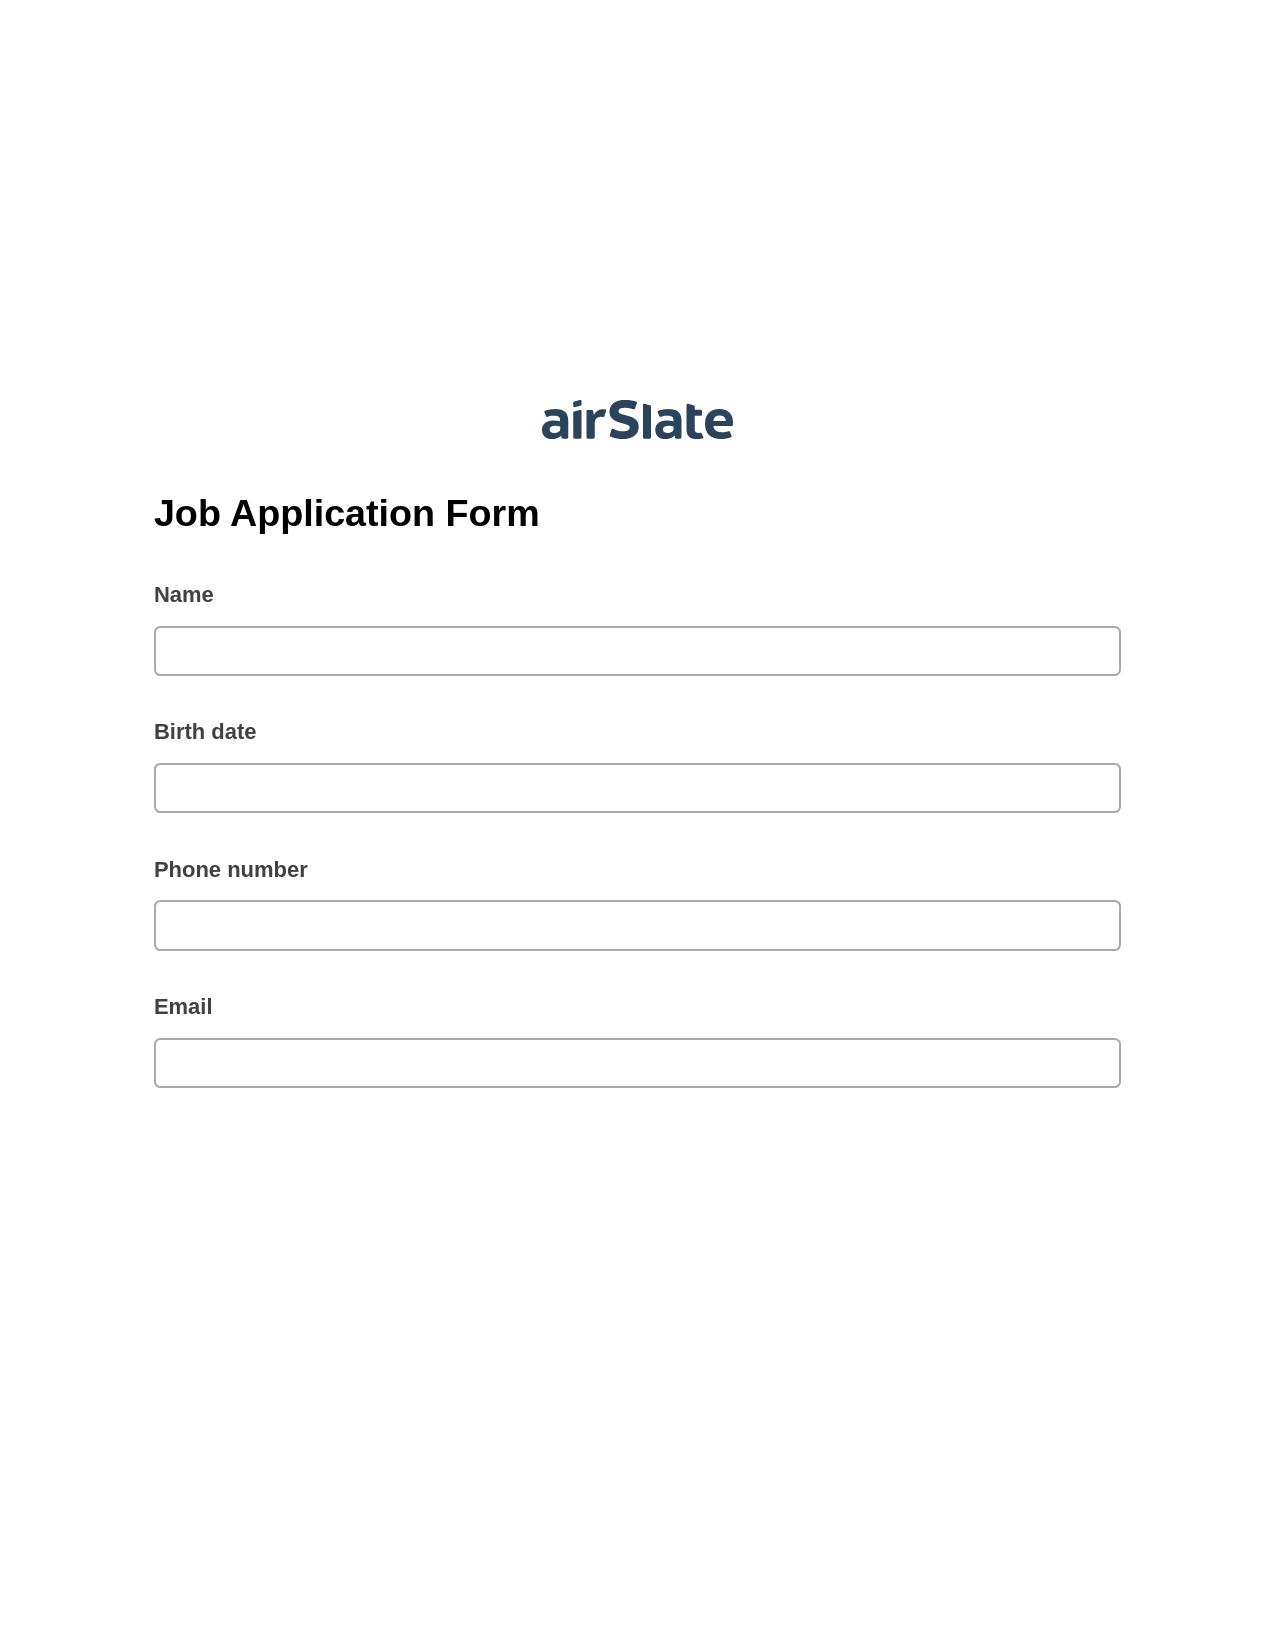 Job Application Form Pre-fill from CSV File Bot, Document Hide Bot, Slack Notification Postfinish Bot